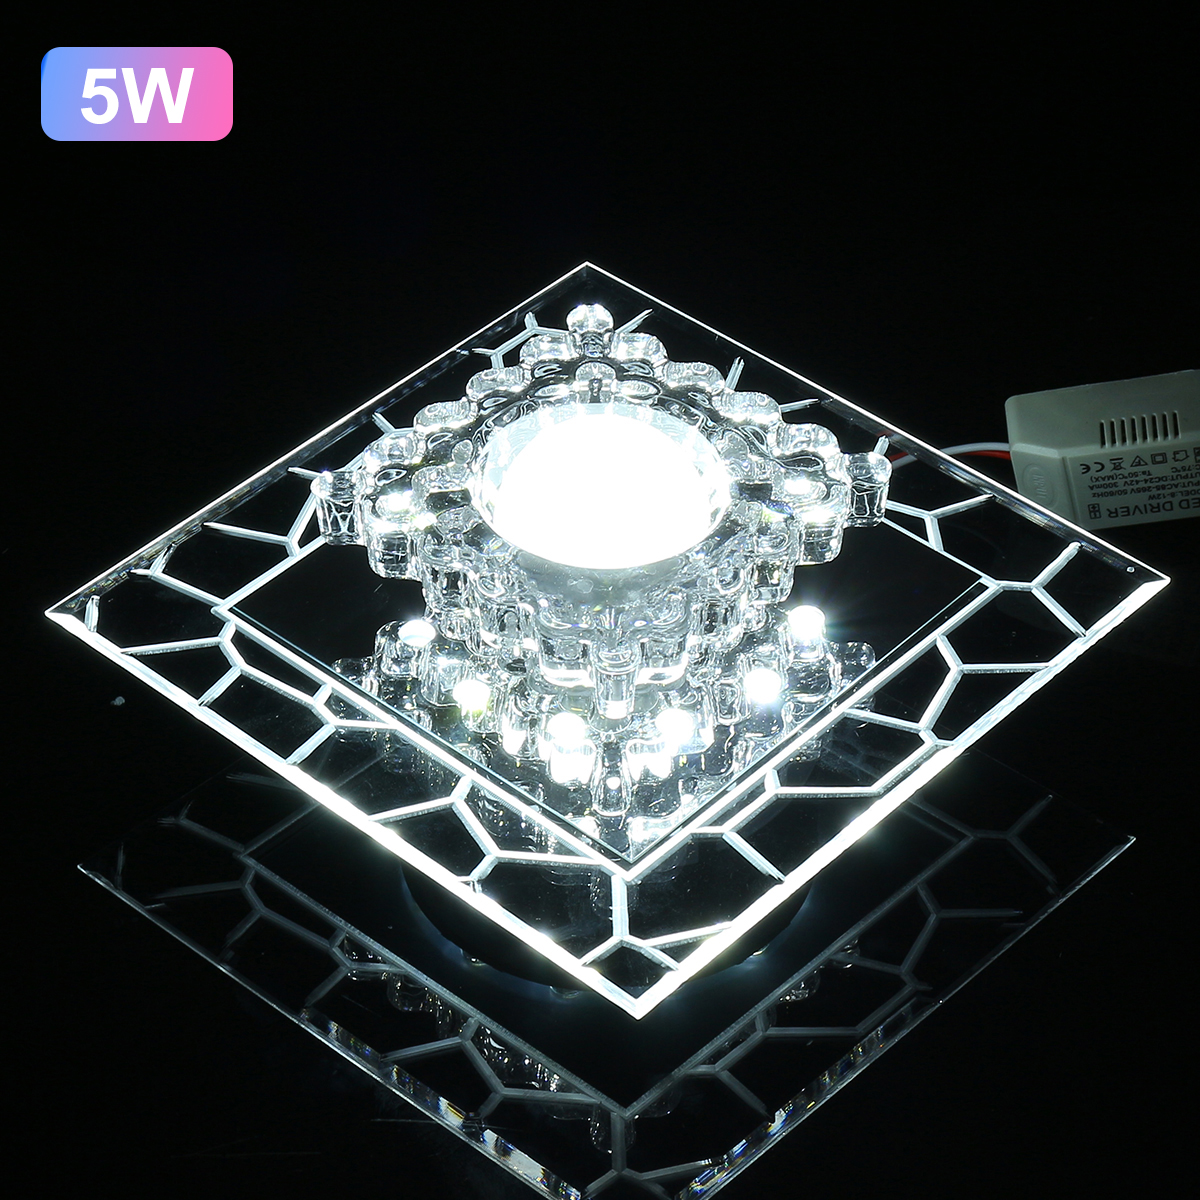 5W-220V-18cm-Bright-Crystal-LED-Ceiling-Lights-Fixture-Pendant-Aisle-Hallway-Lamps-1697166-11